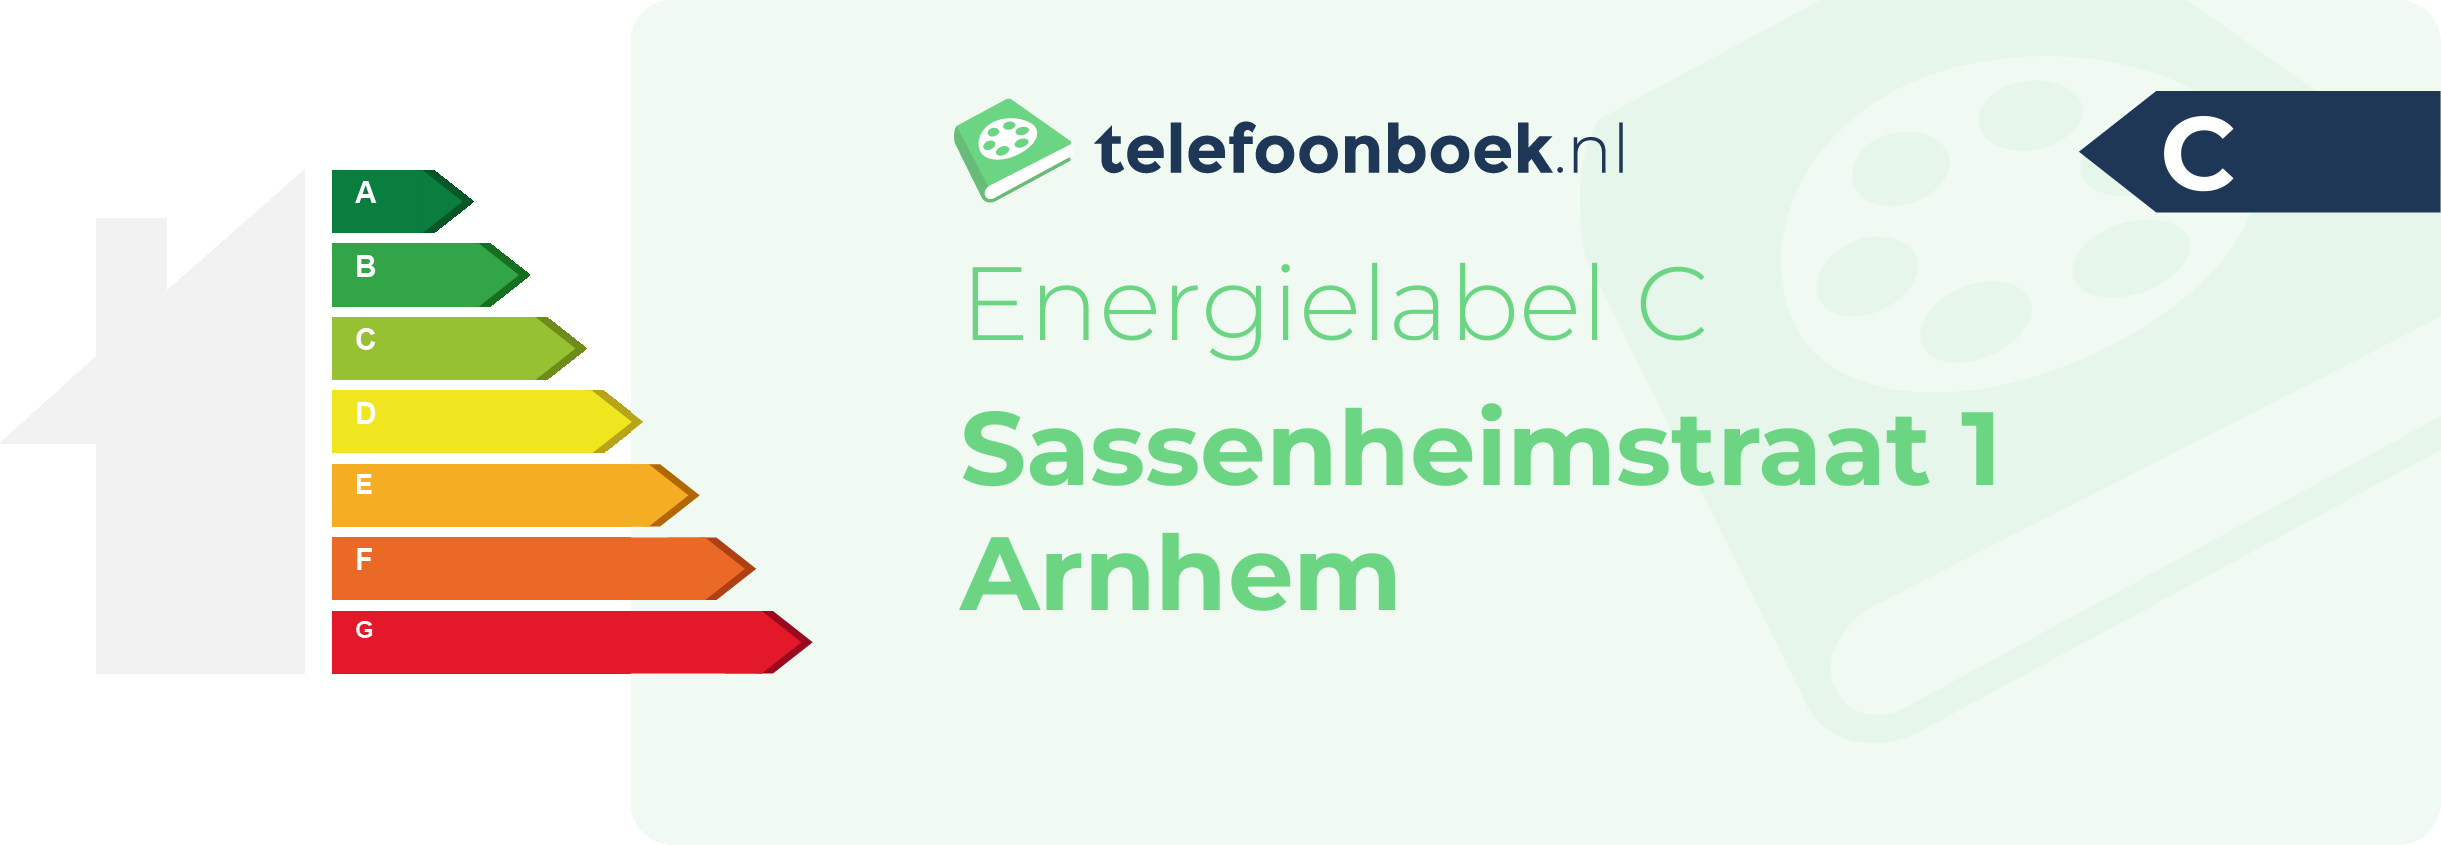 Energielabel Sassenheimstraat 1 Arnhem